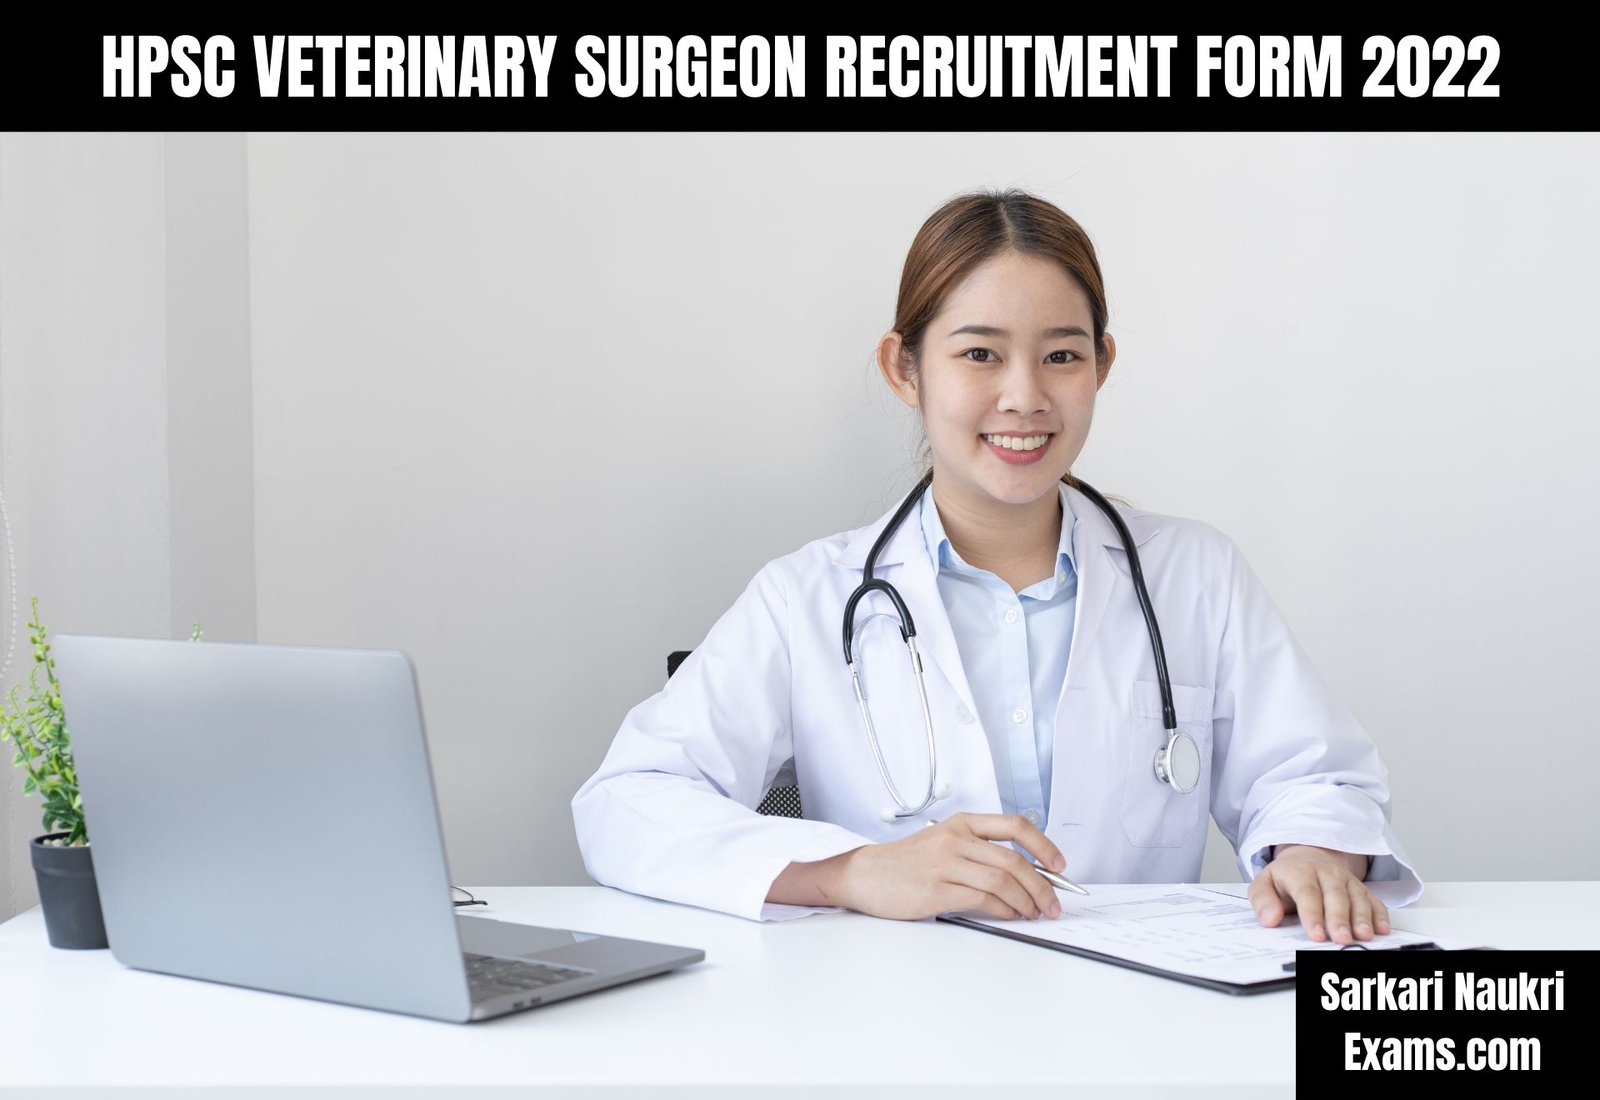 HPSC Veterinary Surgeon Recruitment Form 2022 | Salary Up To 167800/-